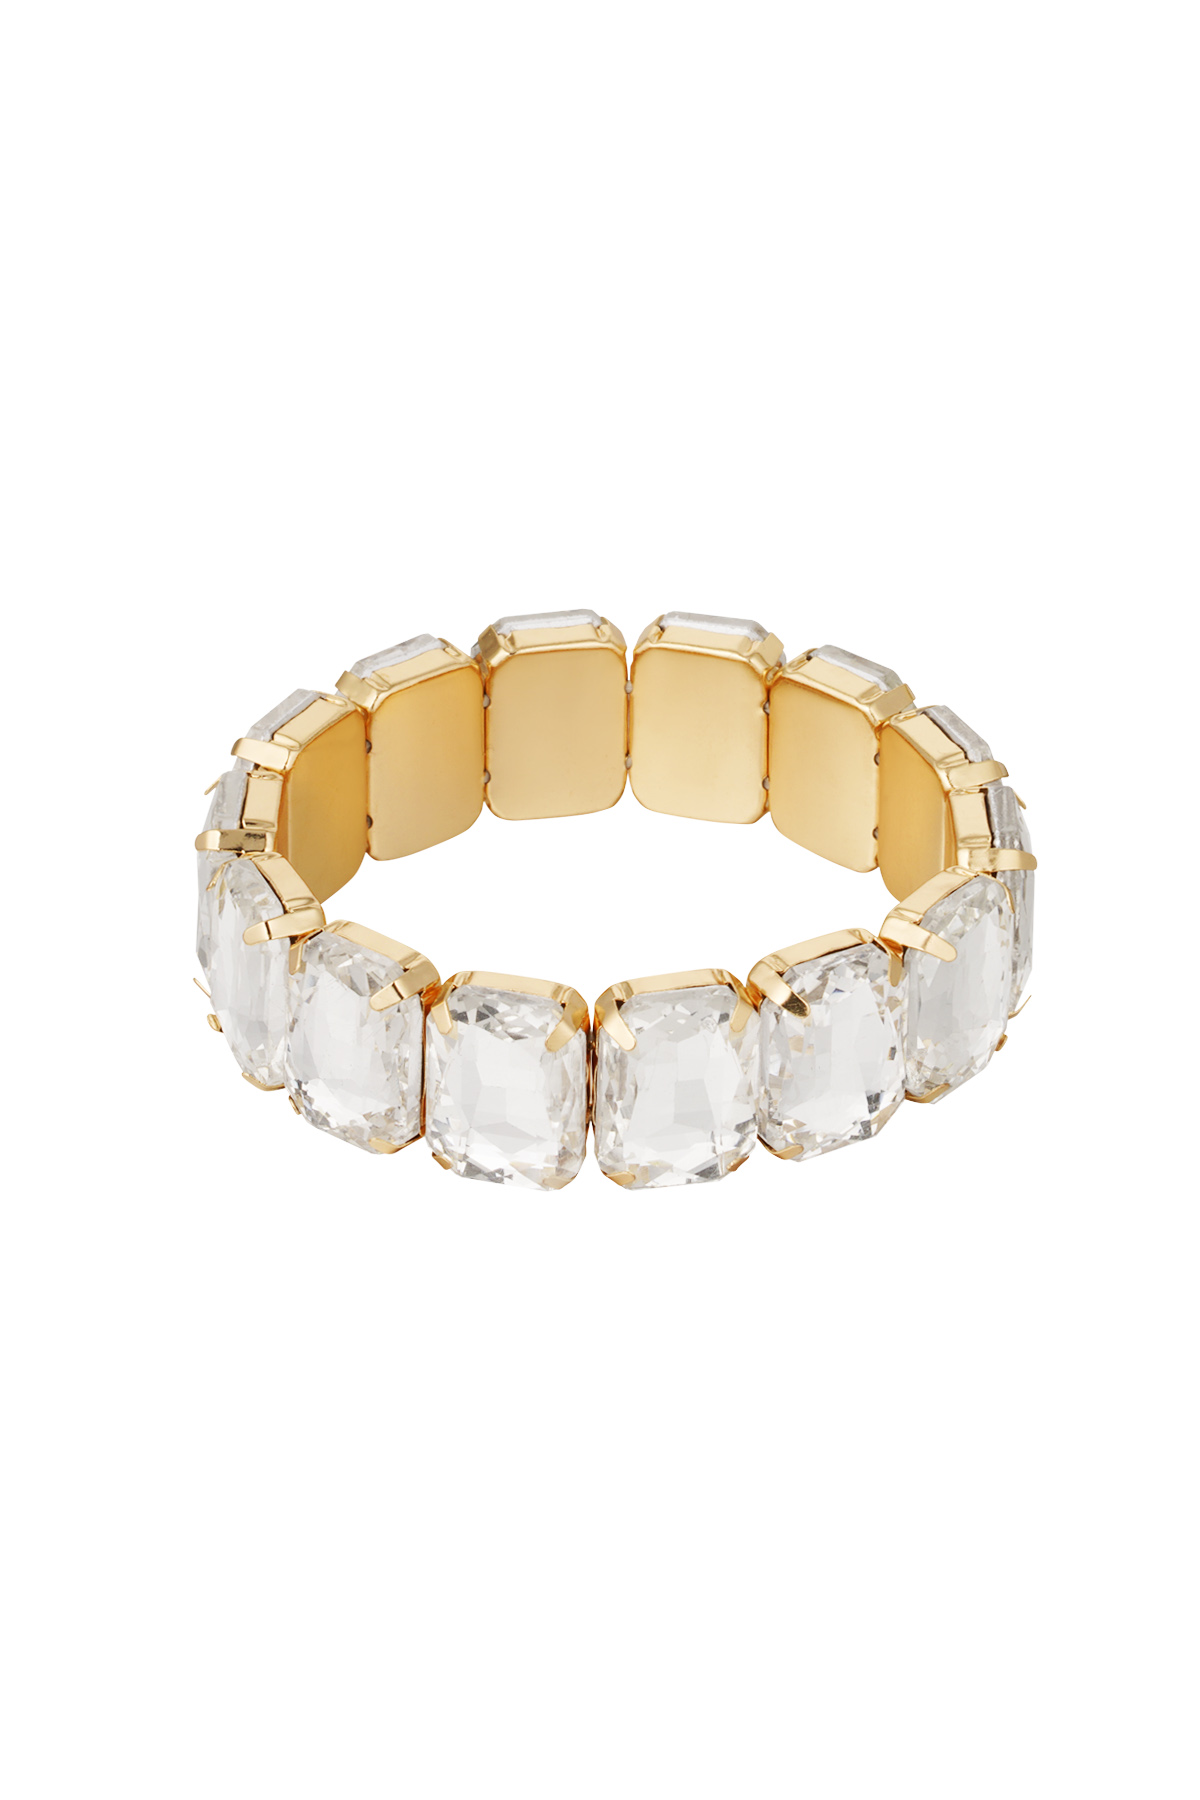 Slave bracelet large stones - gold/white